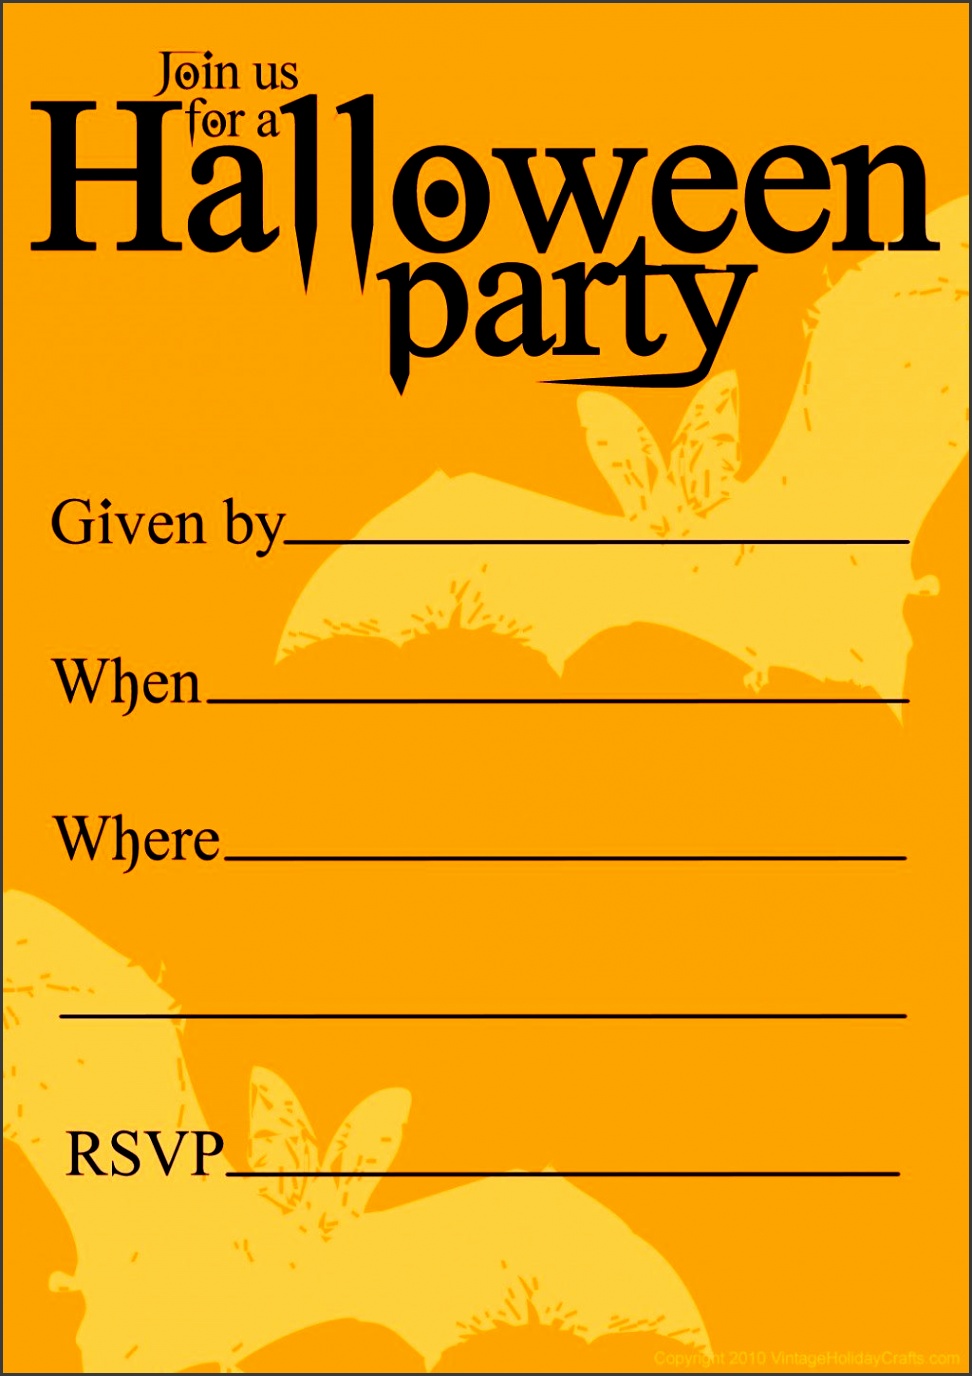 5-free-halloween-invitation-templates-to-email-sampletemplatess